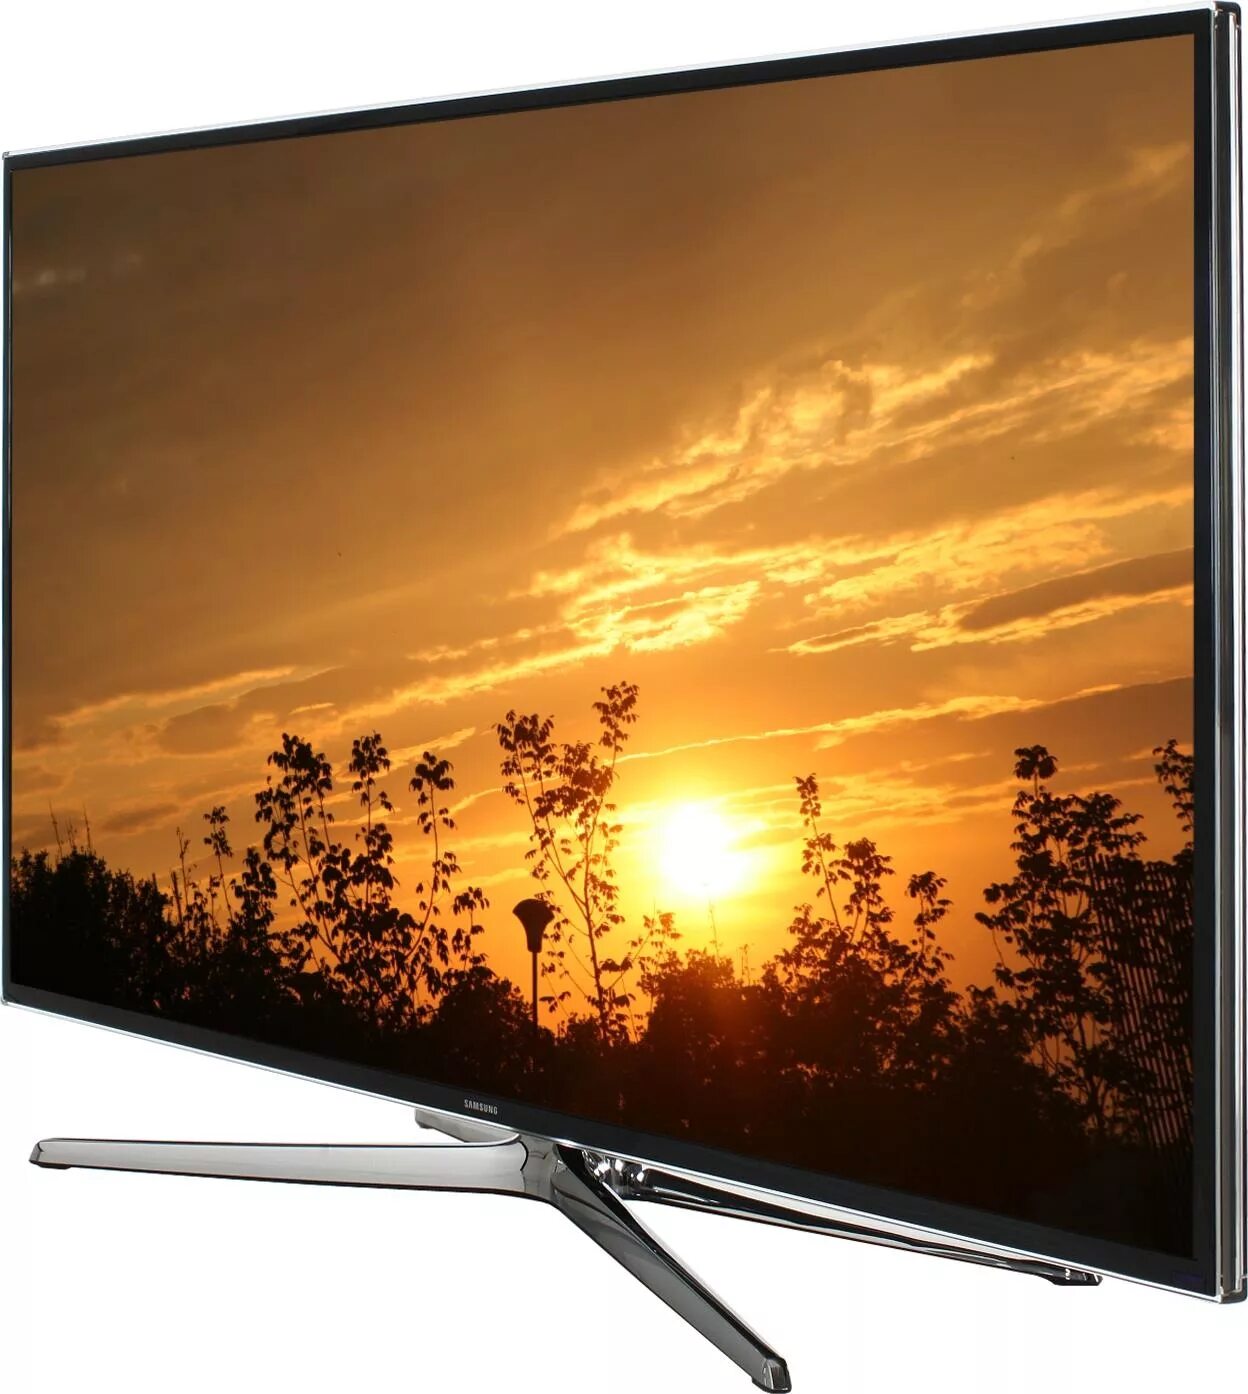 Телевизор самсунг 2014 год. Samsung led 48 Smart TV. Samsung led 40 Smart TV 2014. Samsung led 40 Smart TV 2013. Телевизор Samsung ue48h6230.